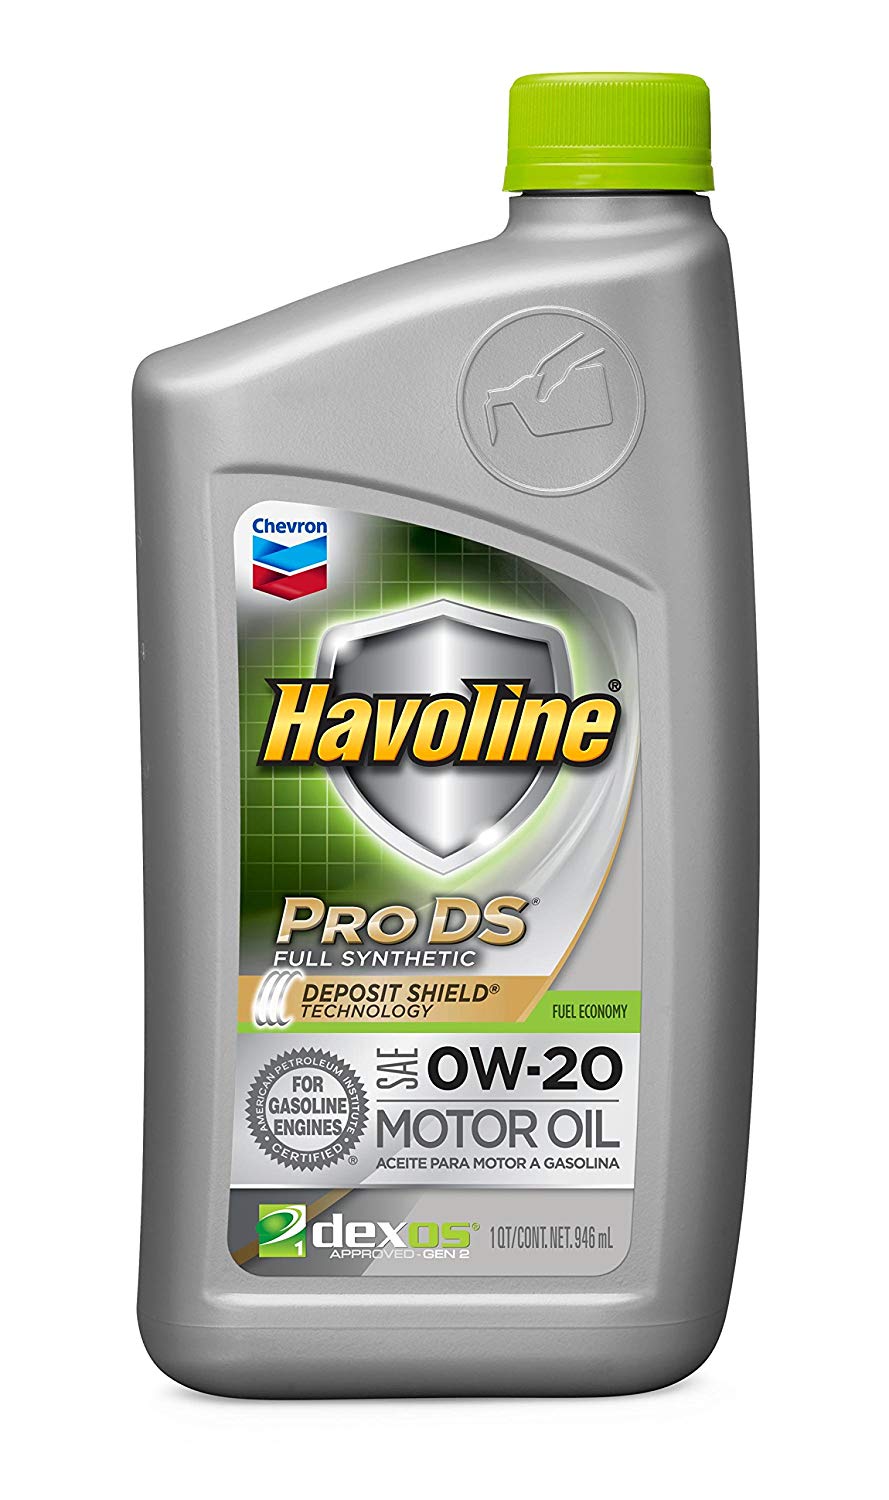 Motor Oil Full-Synthetic Multigrade  Pro DS Havoline Chevron